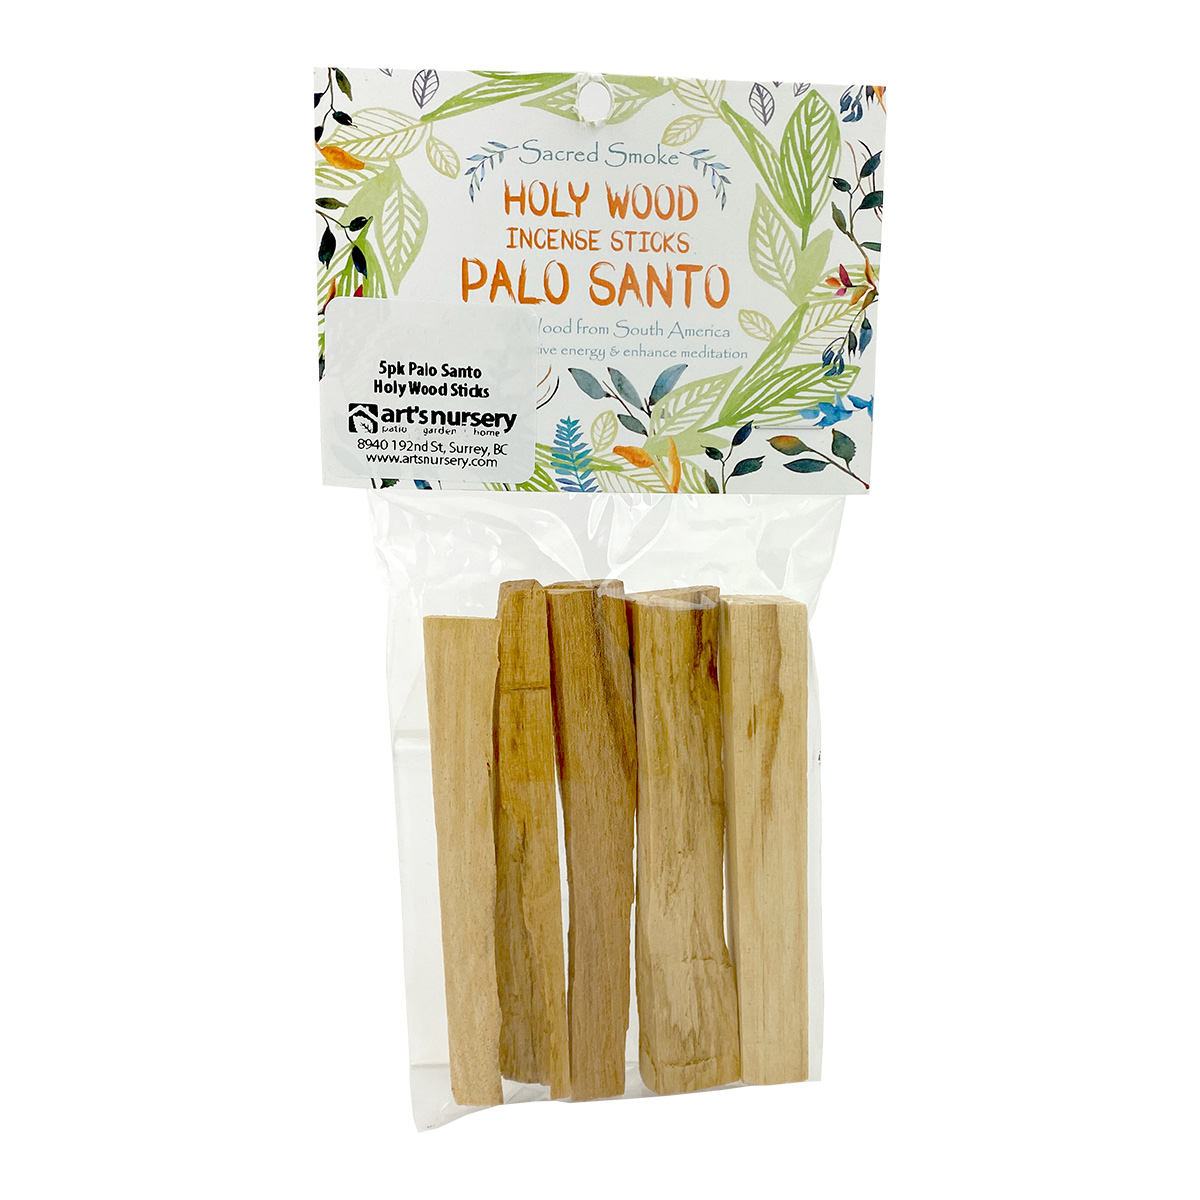 Palo Santo Holy Wood Incense Sticks 4oz